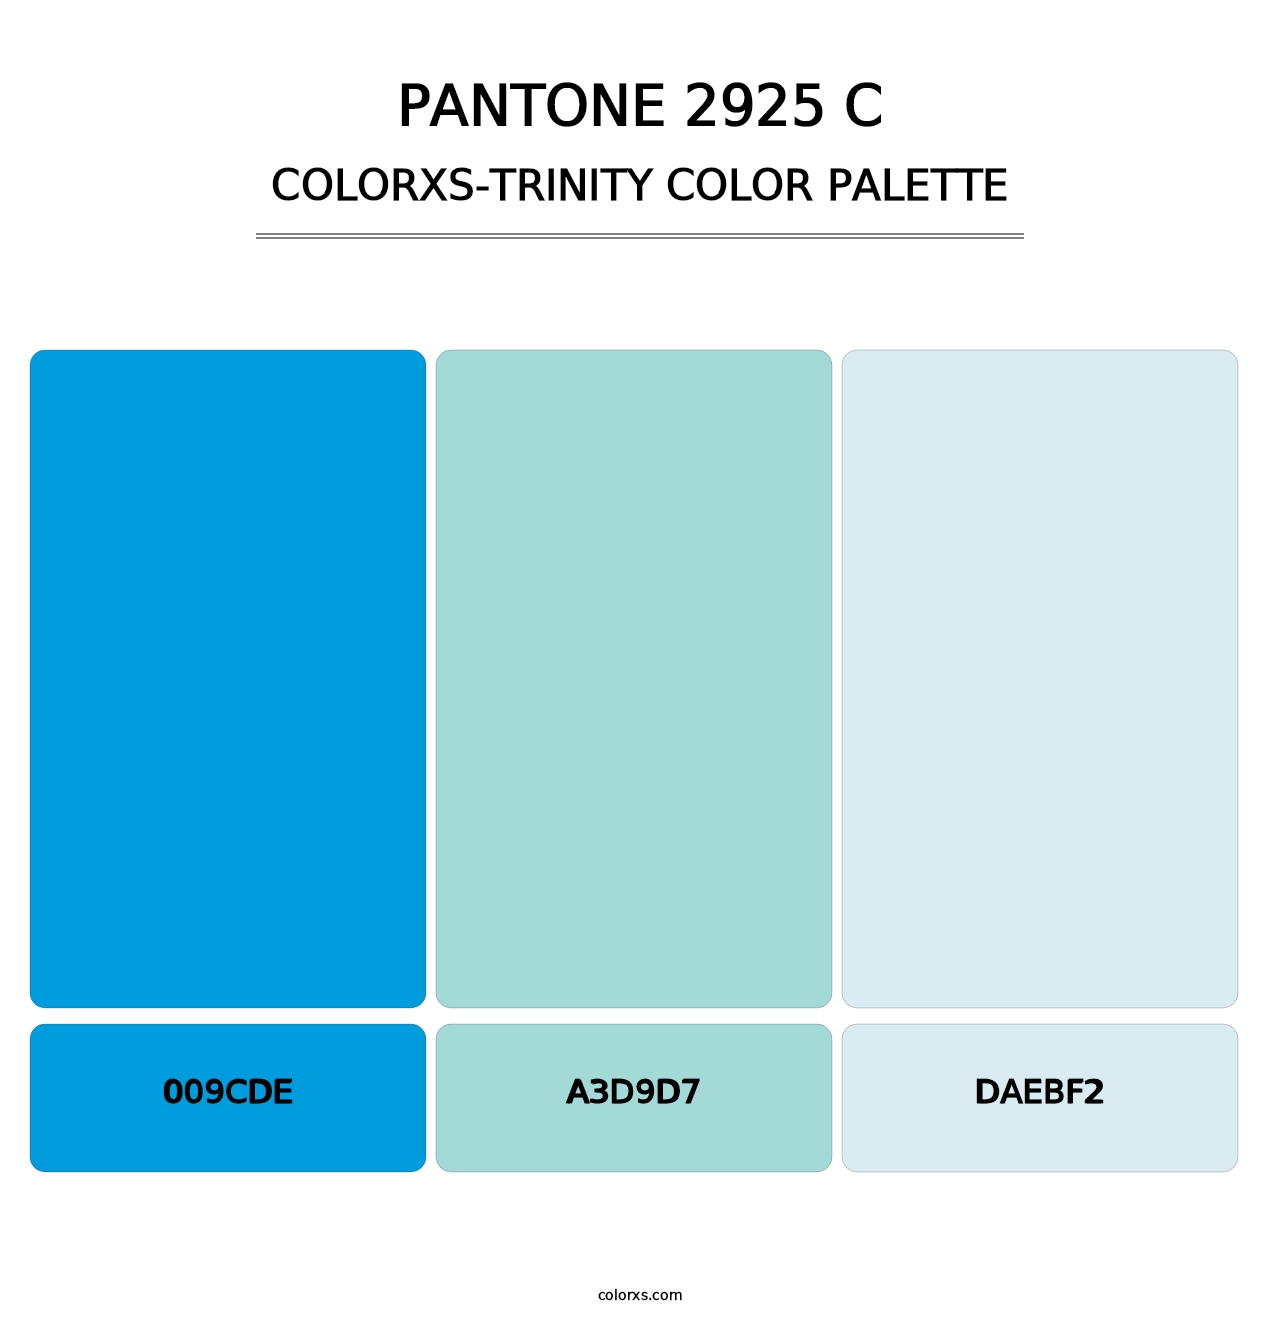 PANTONE 2925 C - Colorxs Trinity Palette